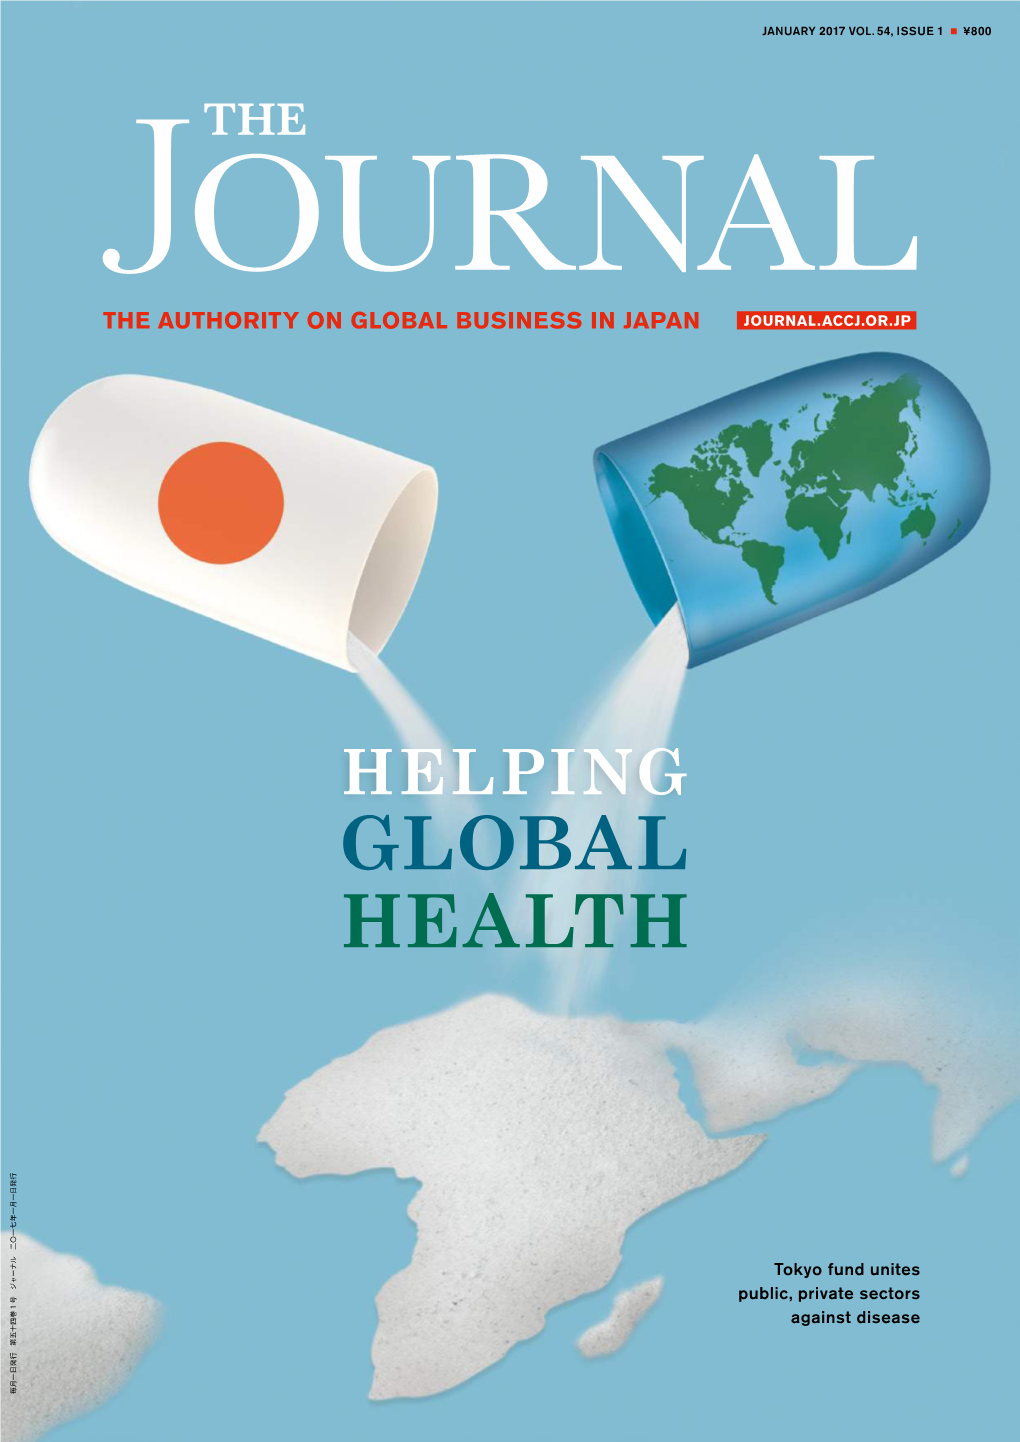 Global Health the American Chamber of Commerce in Japan in Commerce of Chamber American The